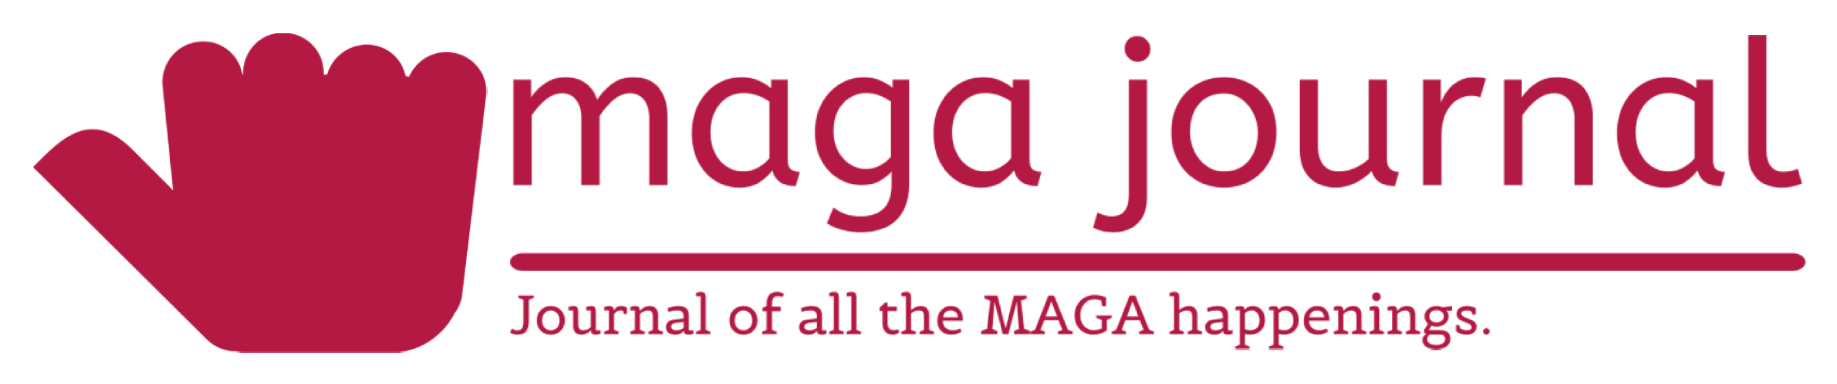 MAGA Journal